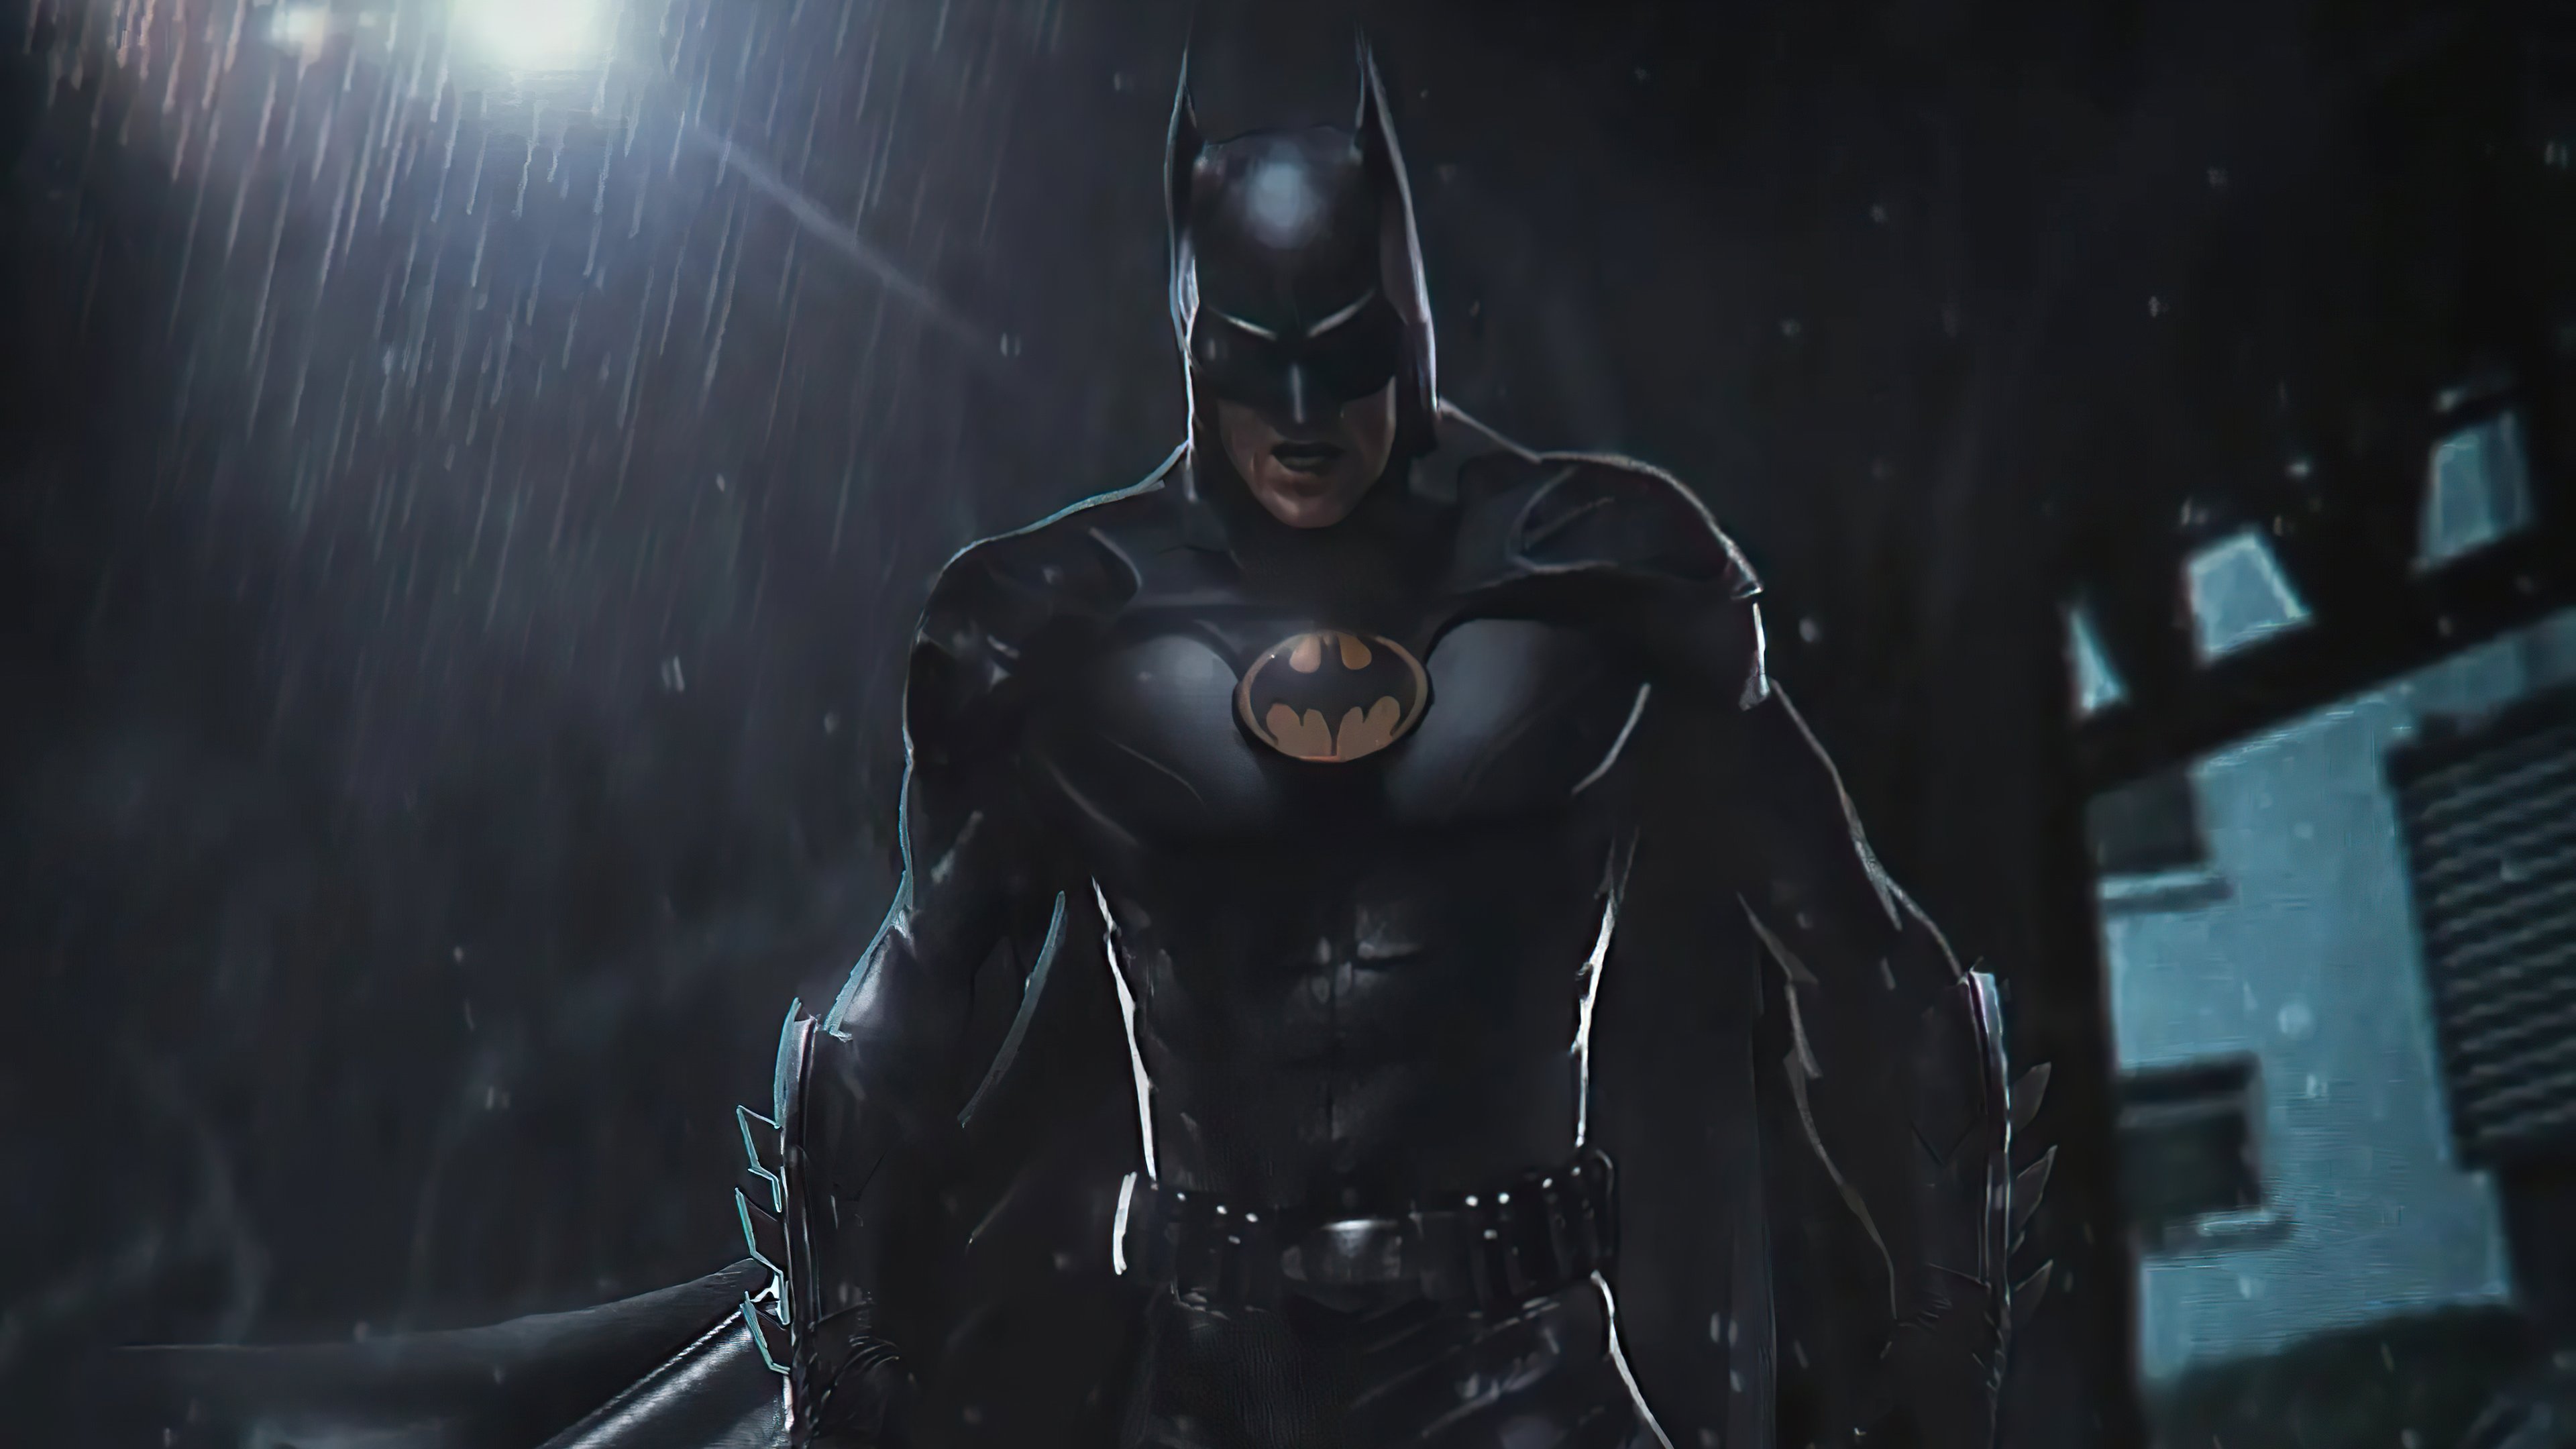 Wallpaper Batman in the rain